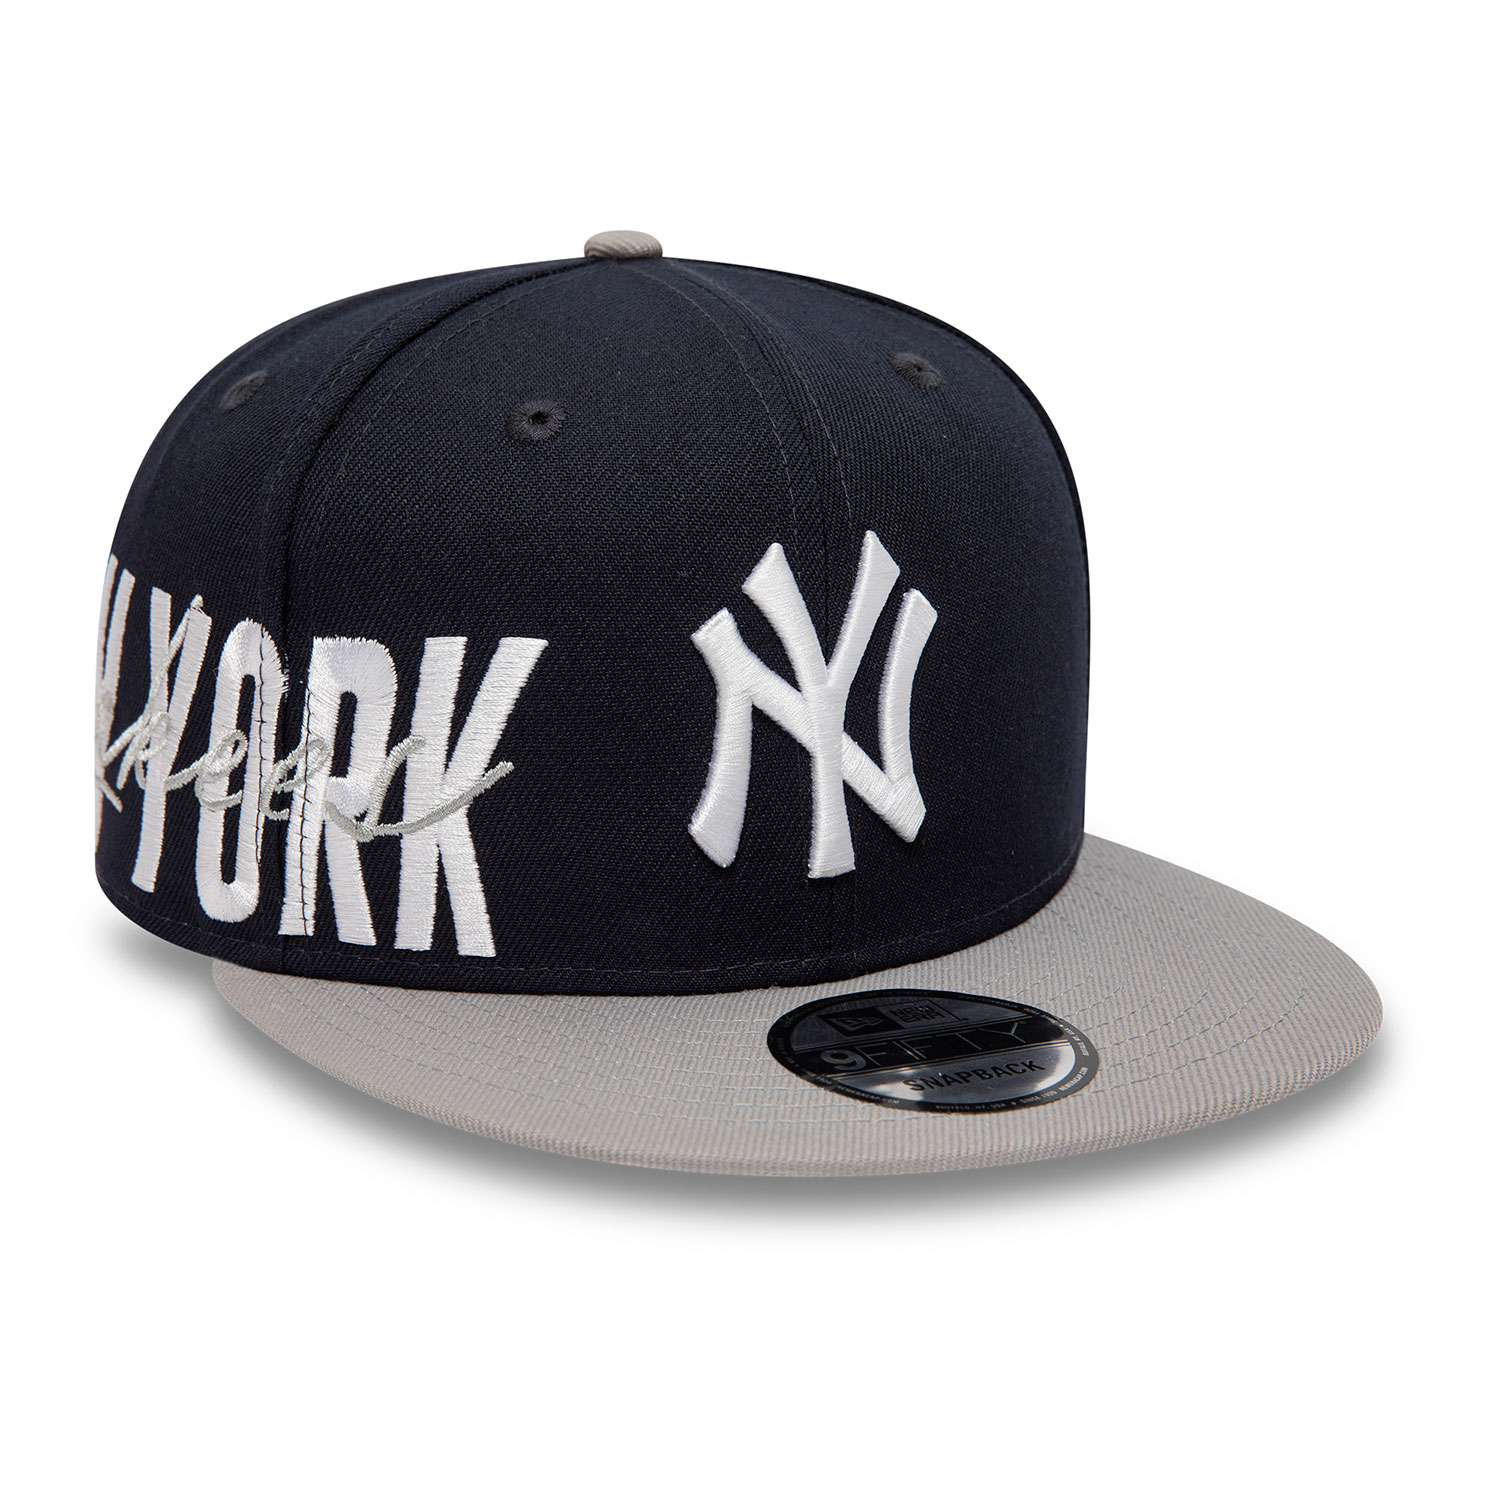 New York Yankees Side Font Navy 9FIFTY Snapback Cap